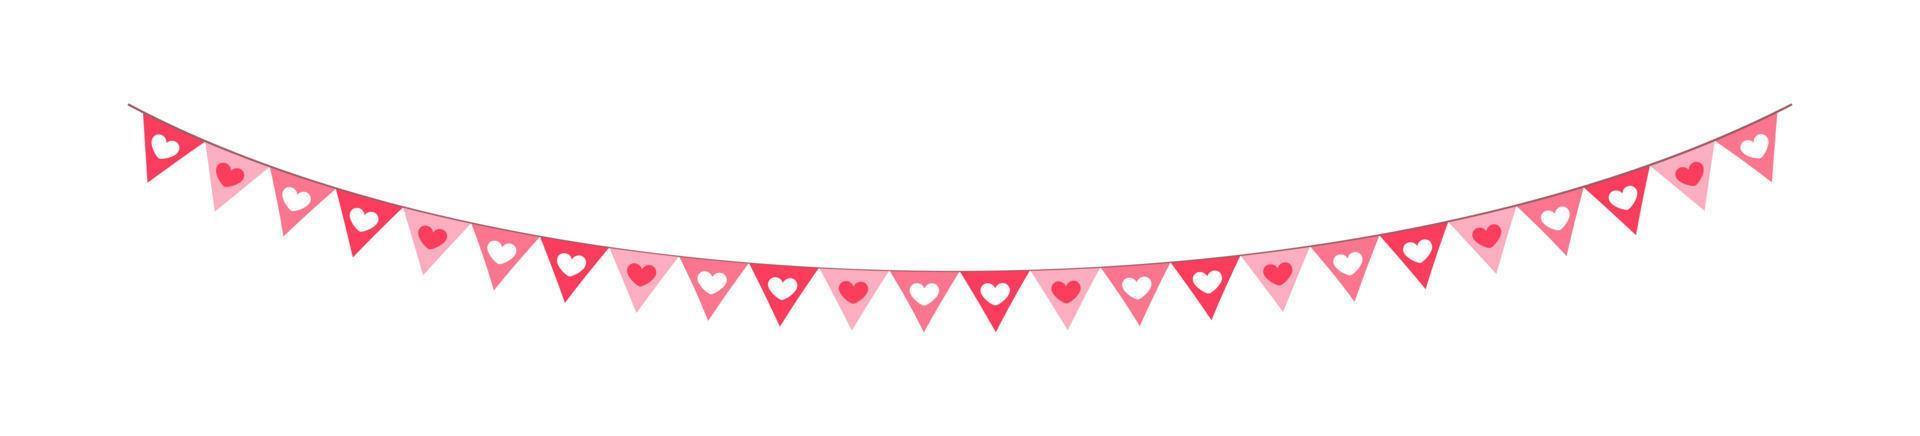 valentinstag rote herzen banner bunting vektor illustration clipart